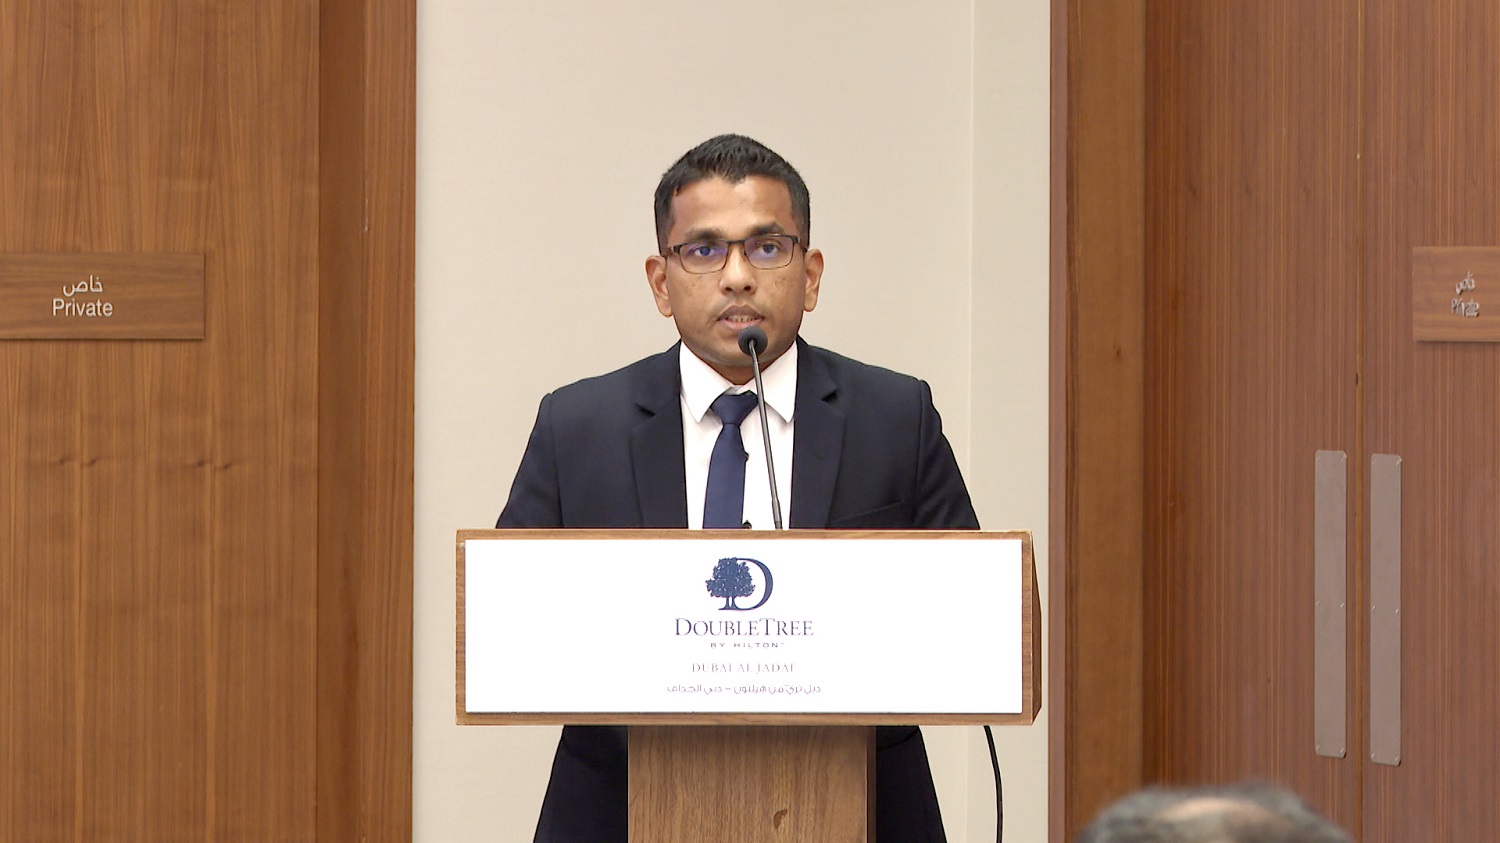 Mr. Sajeep Kalinga, President of the CA Sri Lanka UAE Chapter addressing the event.